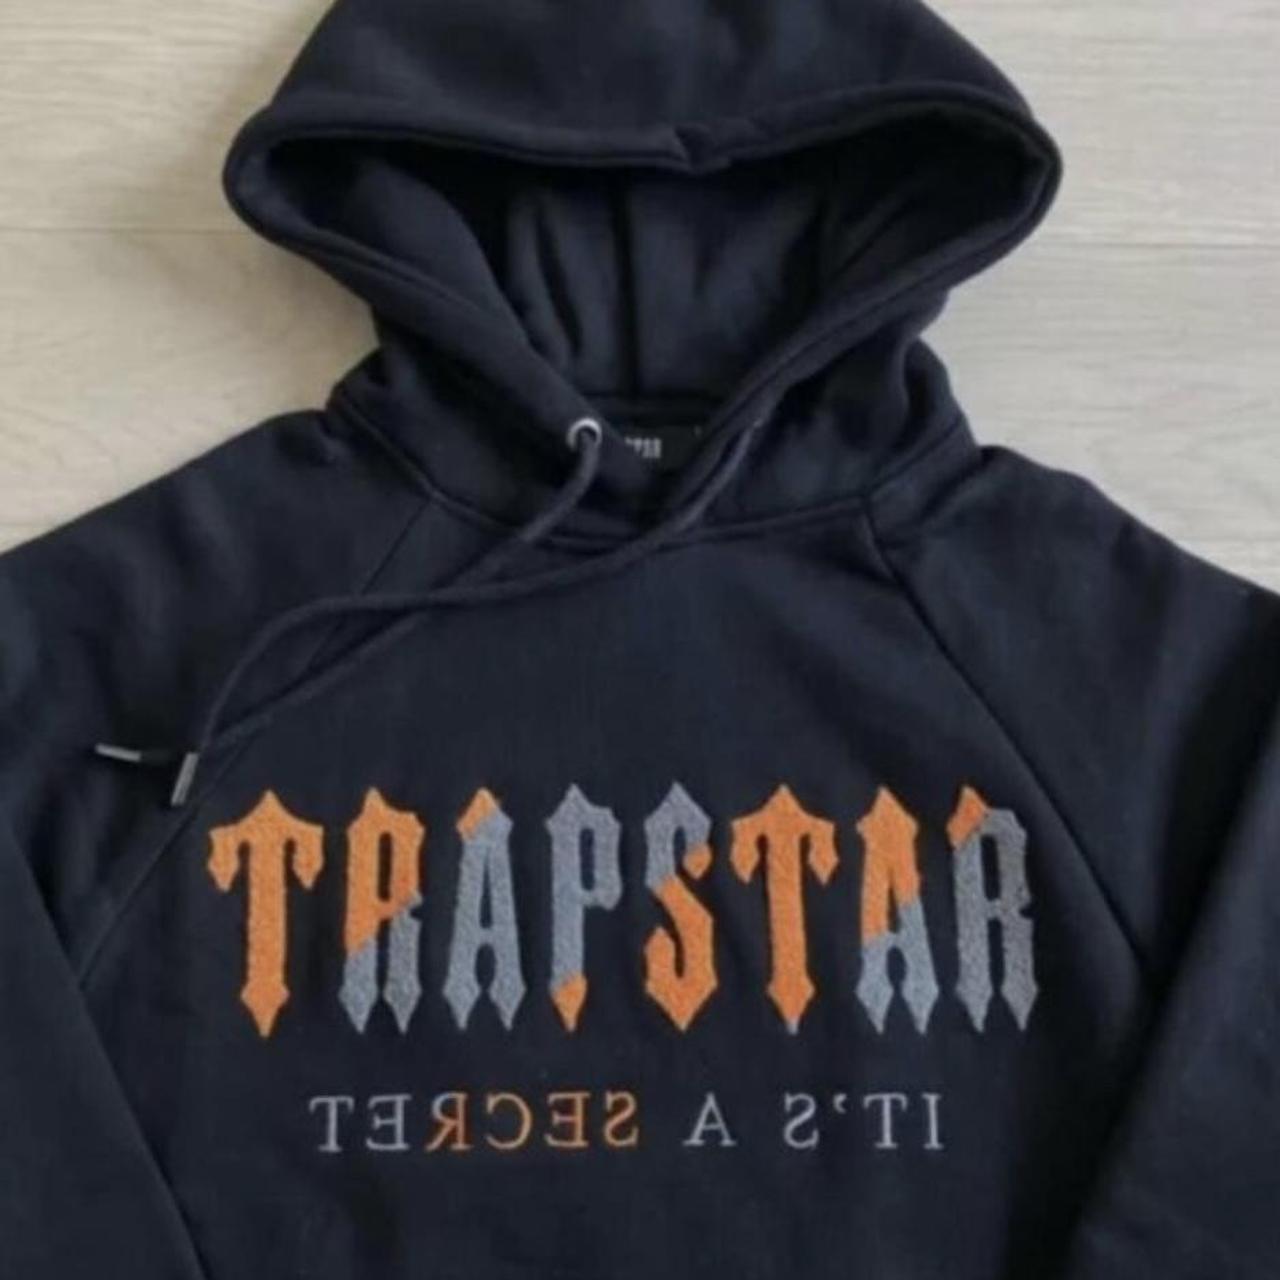 Trapstar tracksuit RARE - Depop